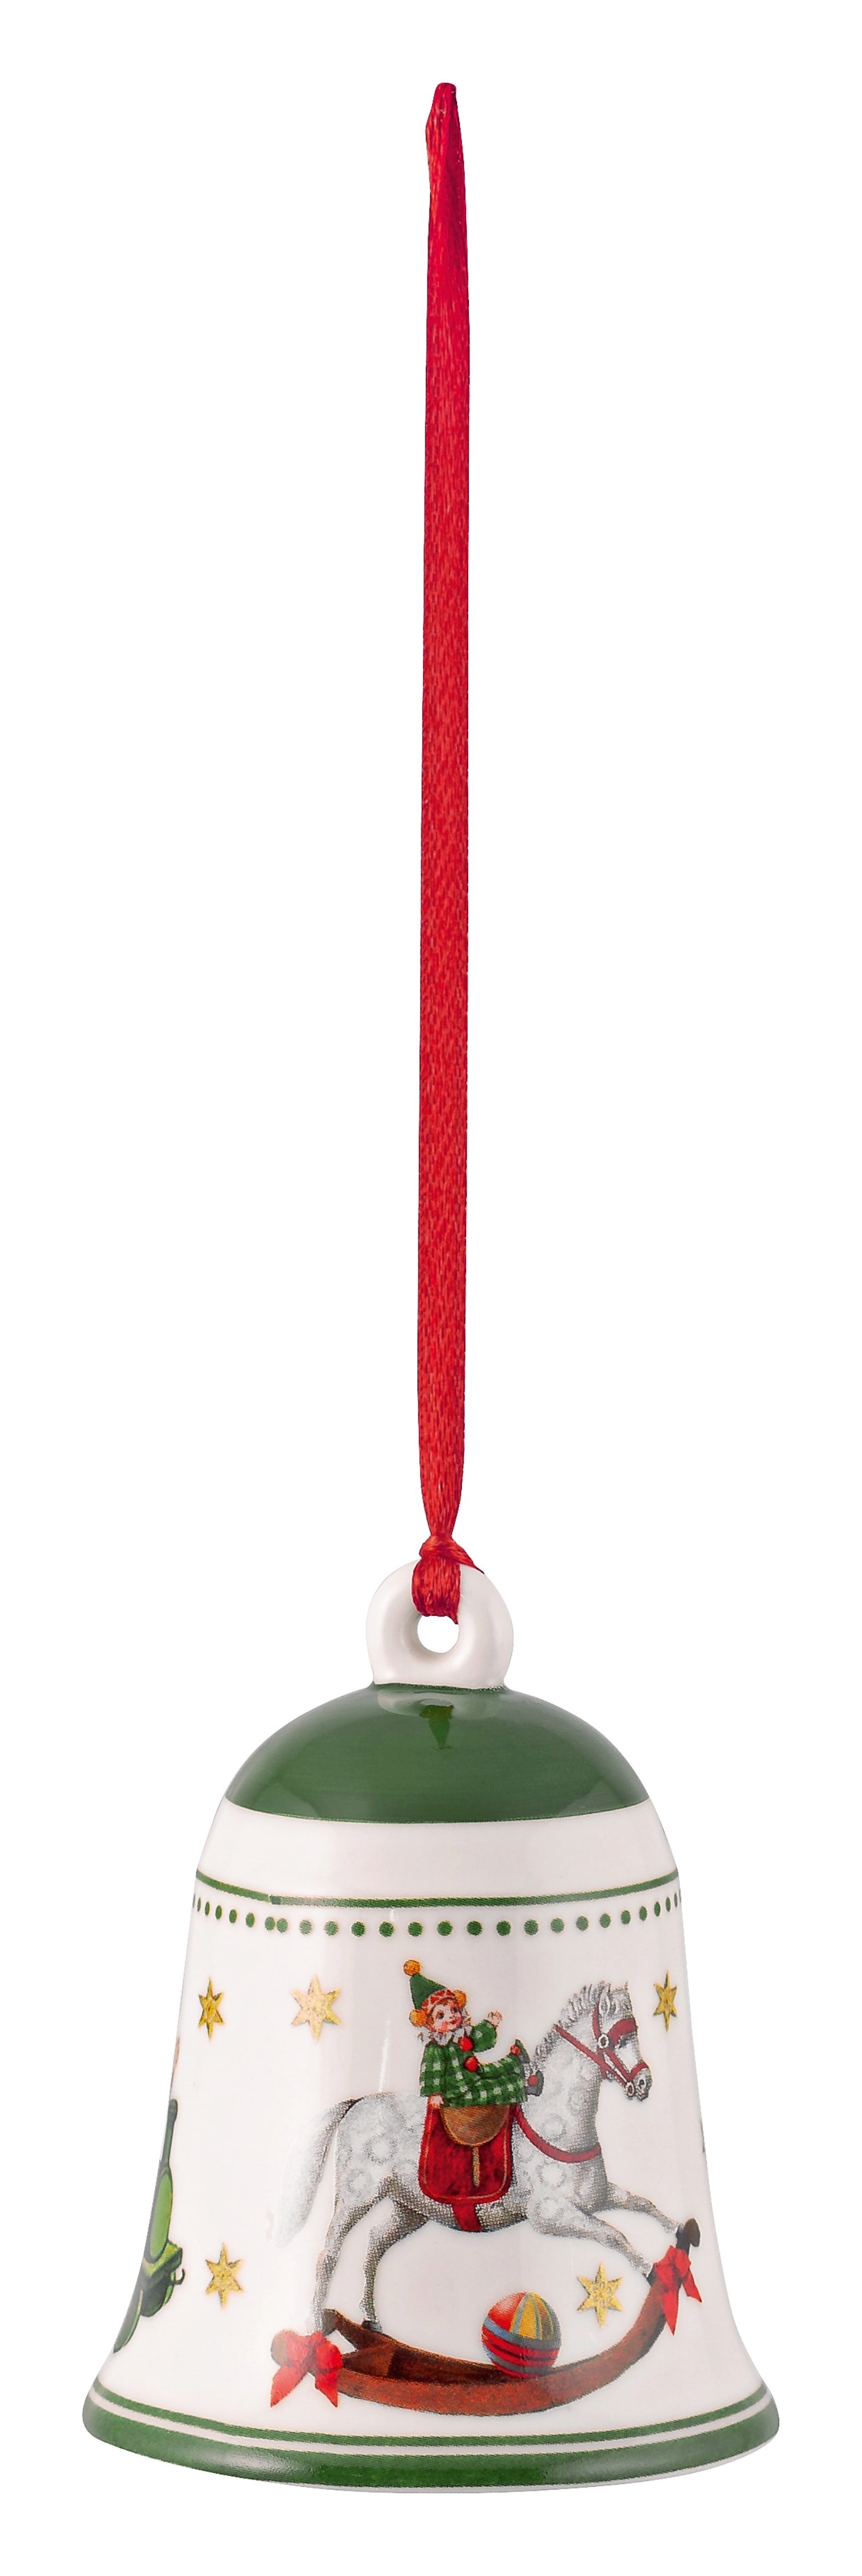 Christmas Edition Glocke Spielzeug grün